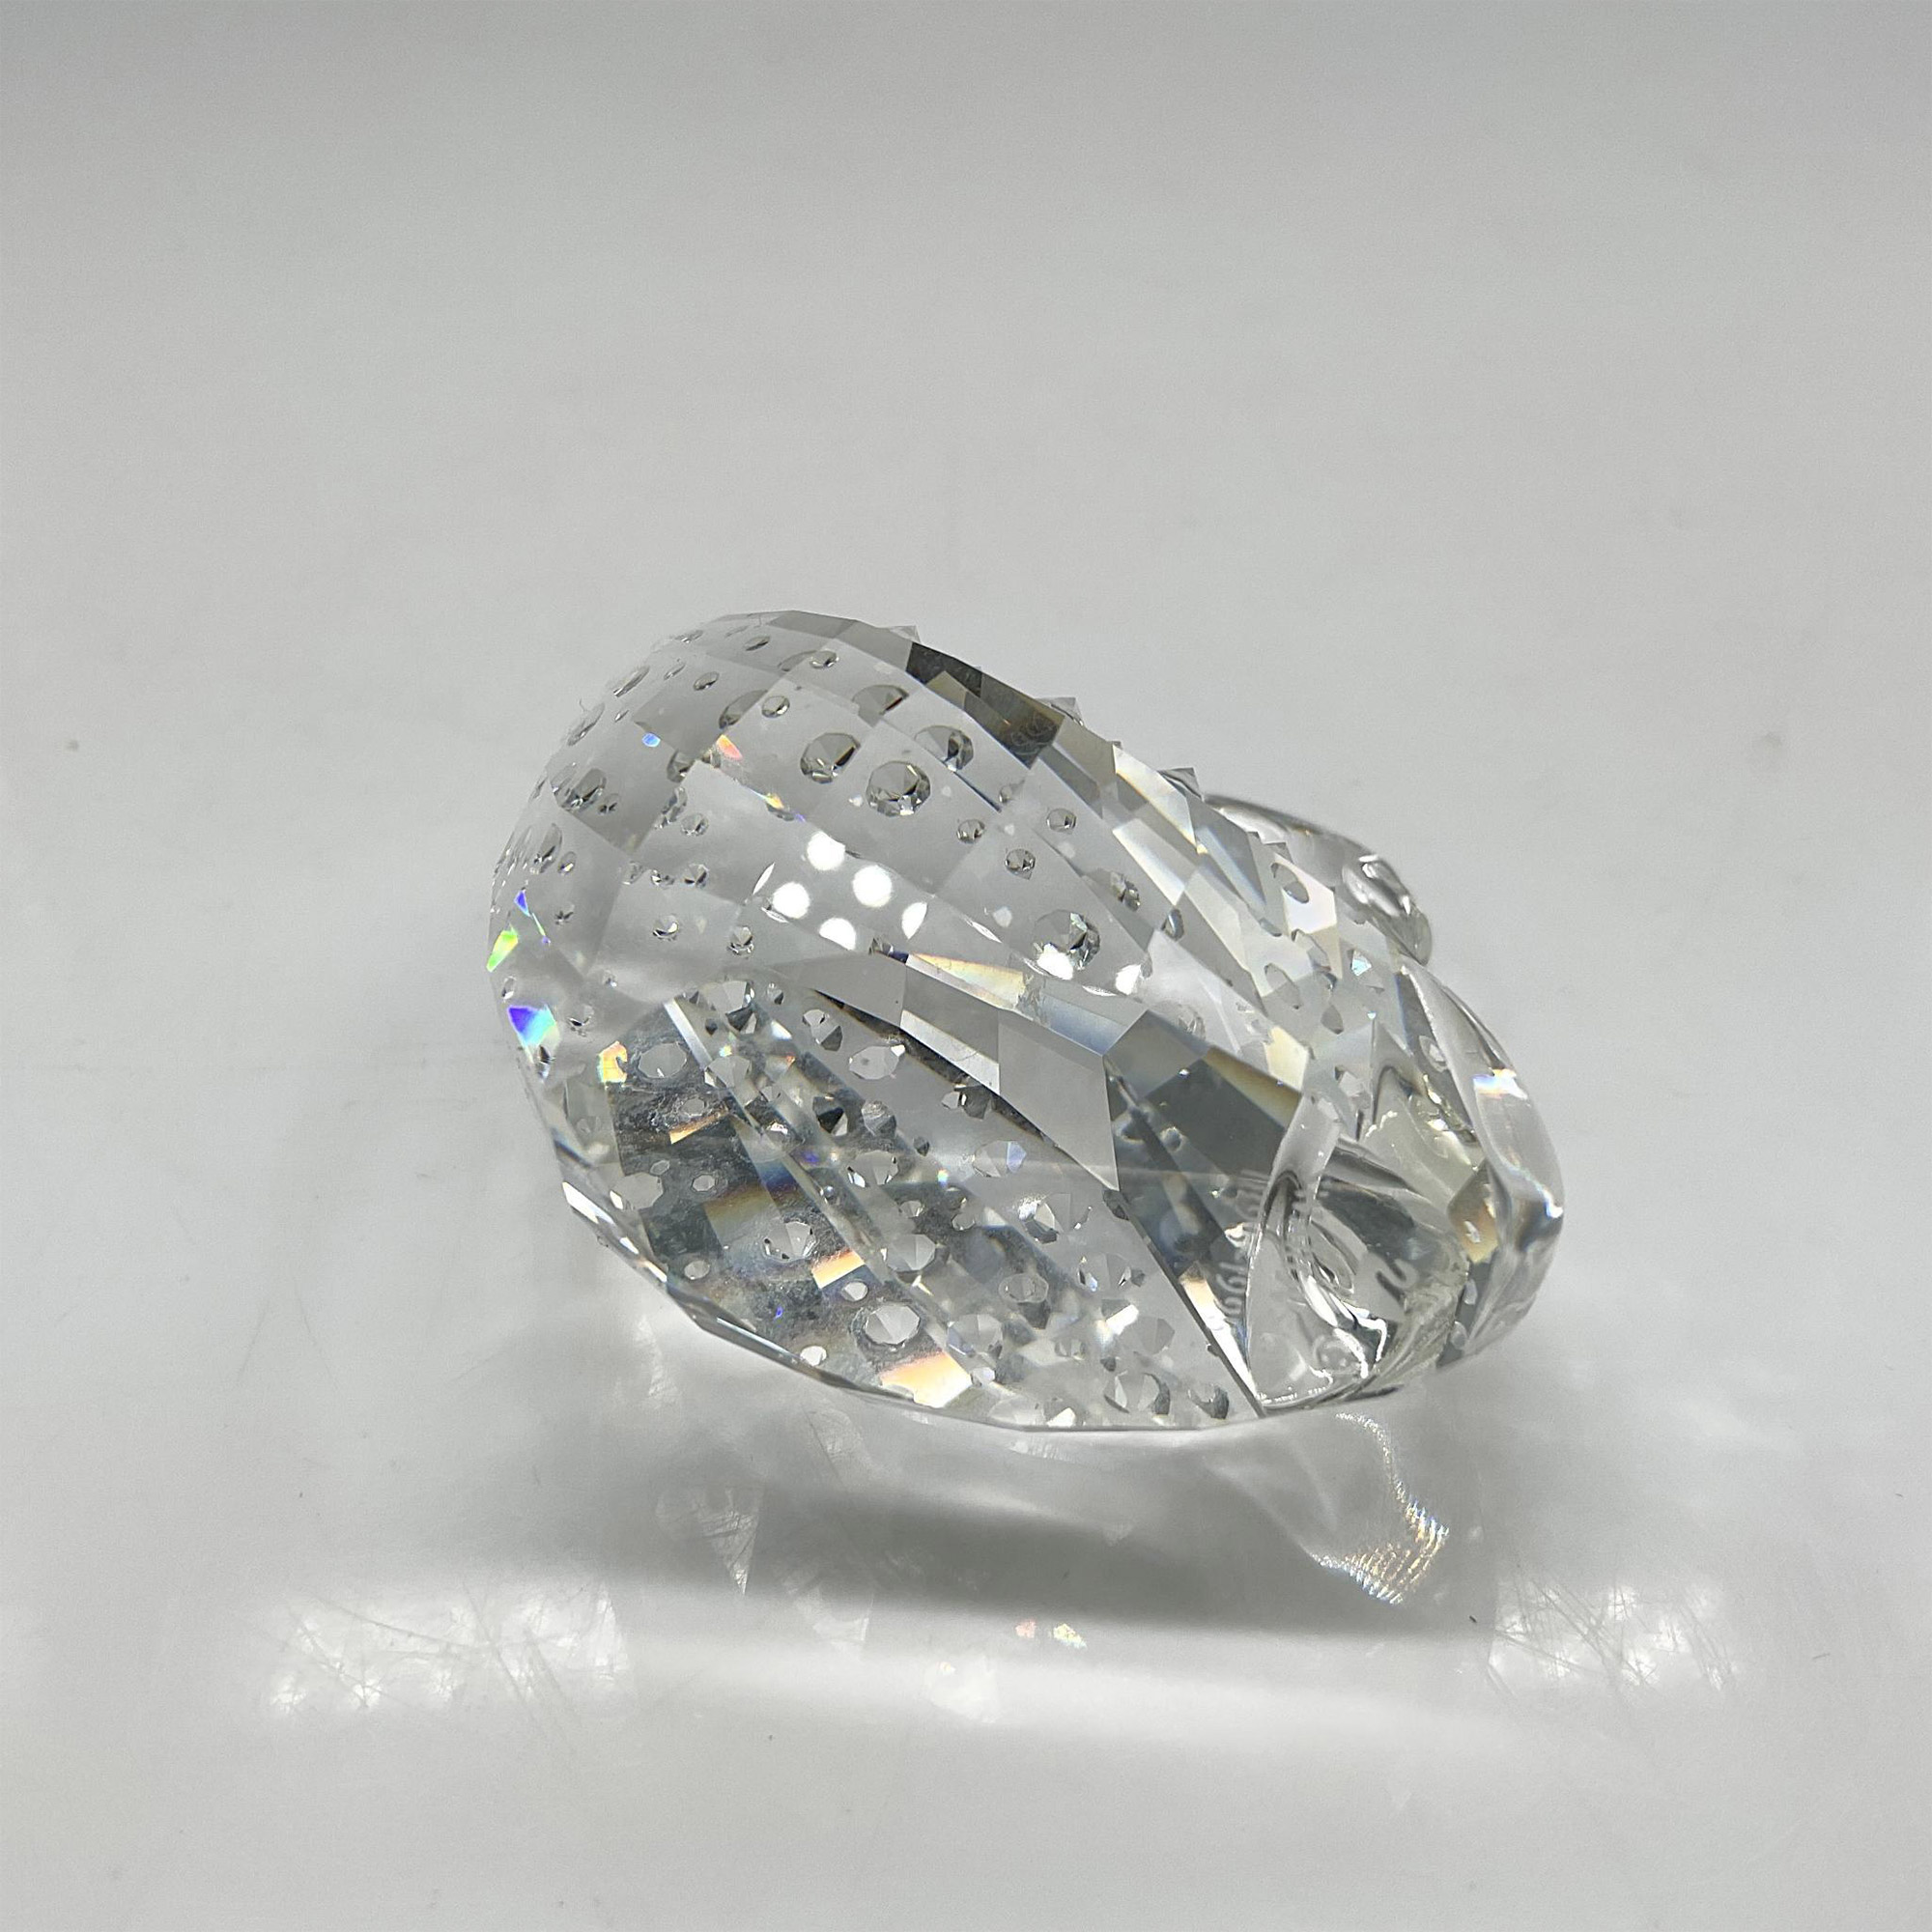 Swarovski Silver Crystal Figurine, Centenary Swan - Image 3 of 4